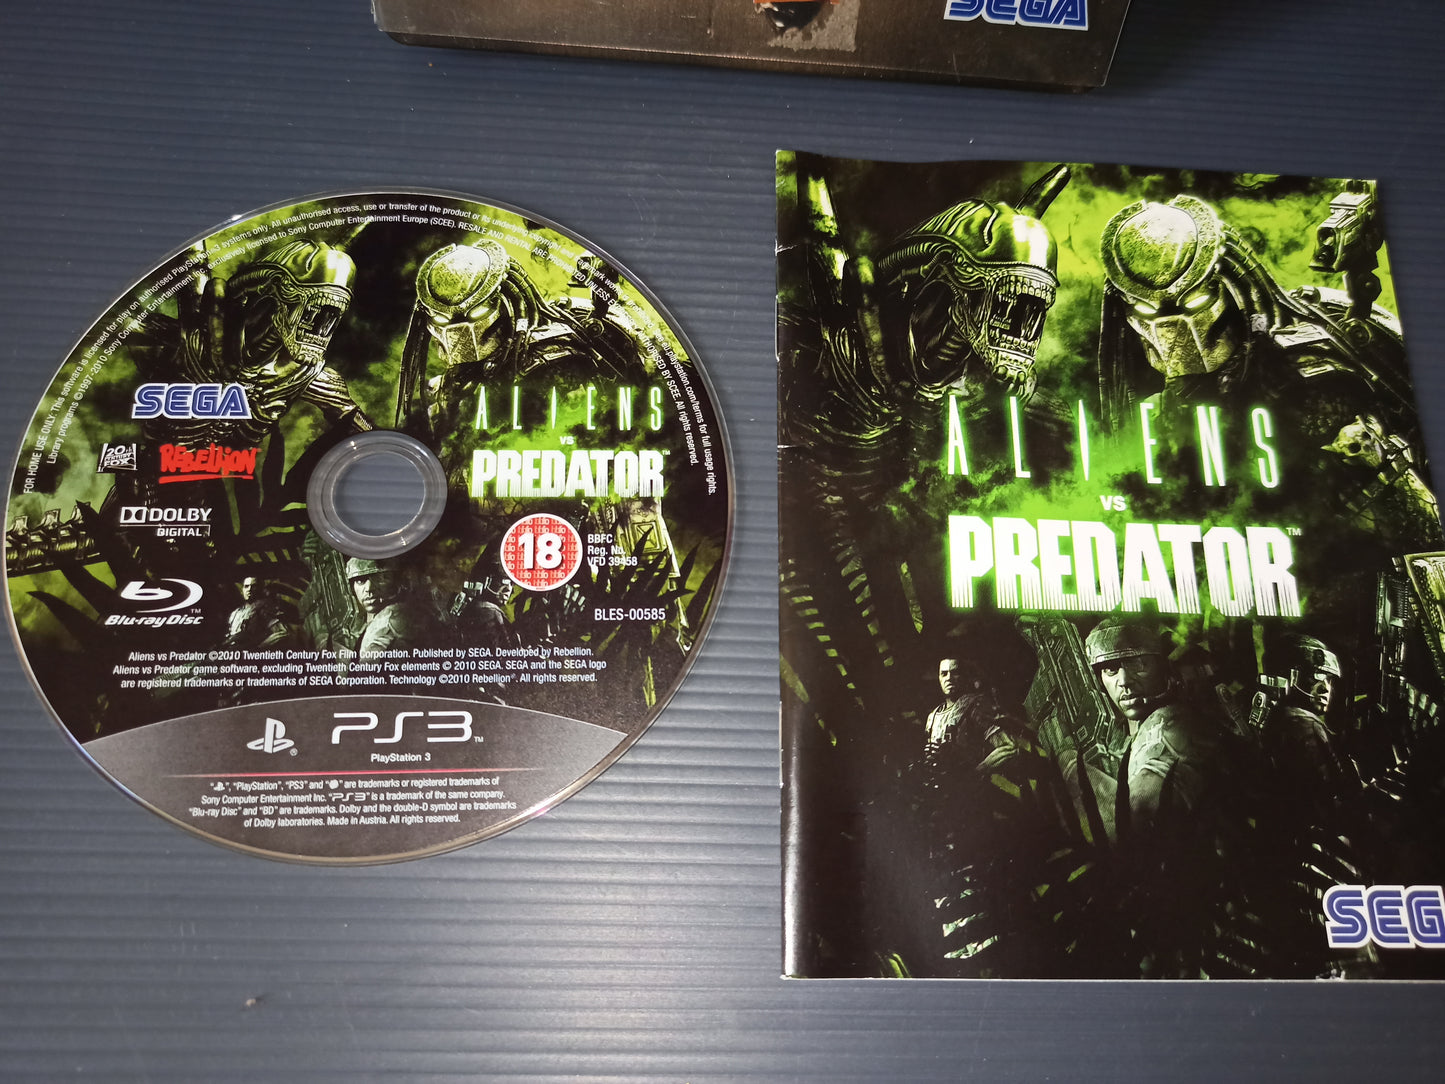 Alien vs Predator steelbook video game for PS3